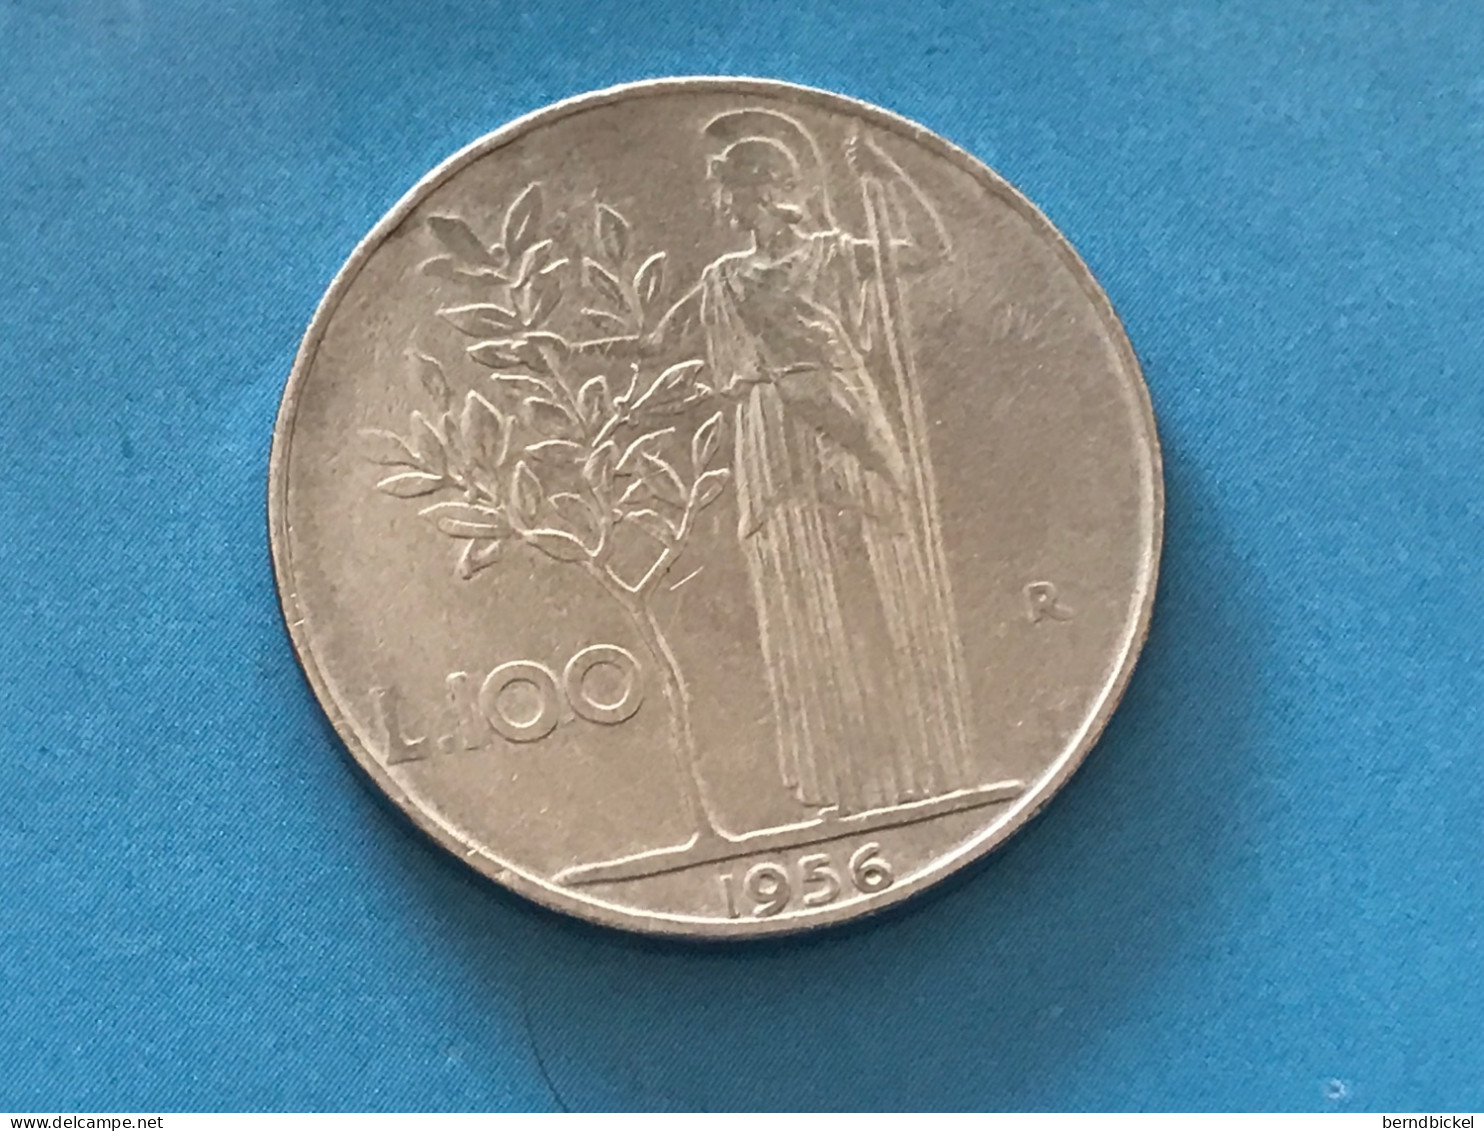 Münze Münzen Umlaufmünze Italien 100 Lire 1956 - 100 Lire